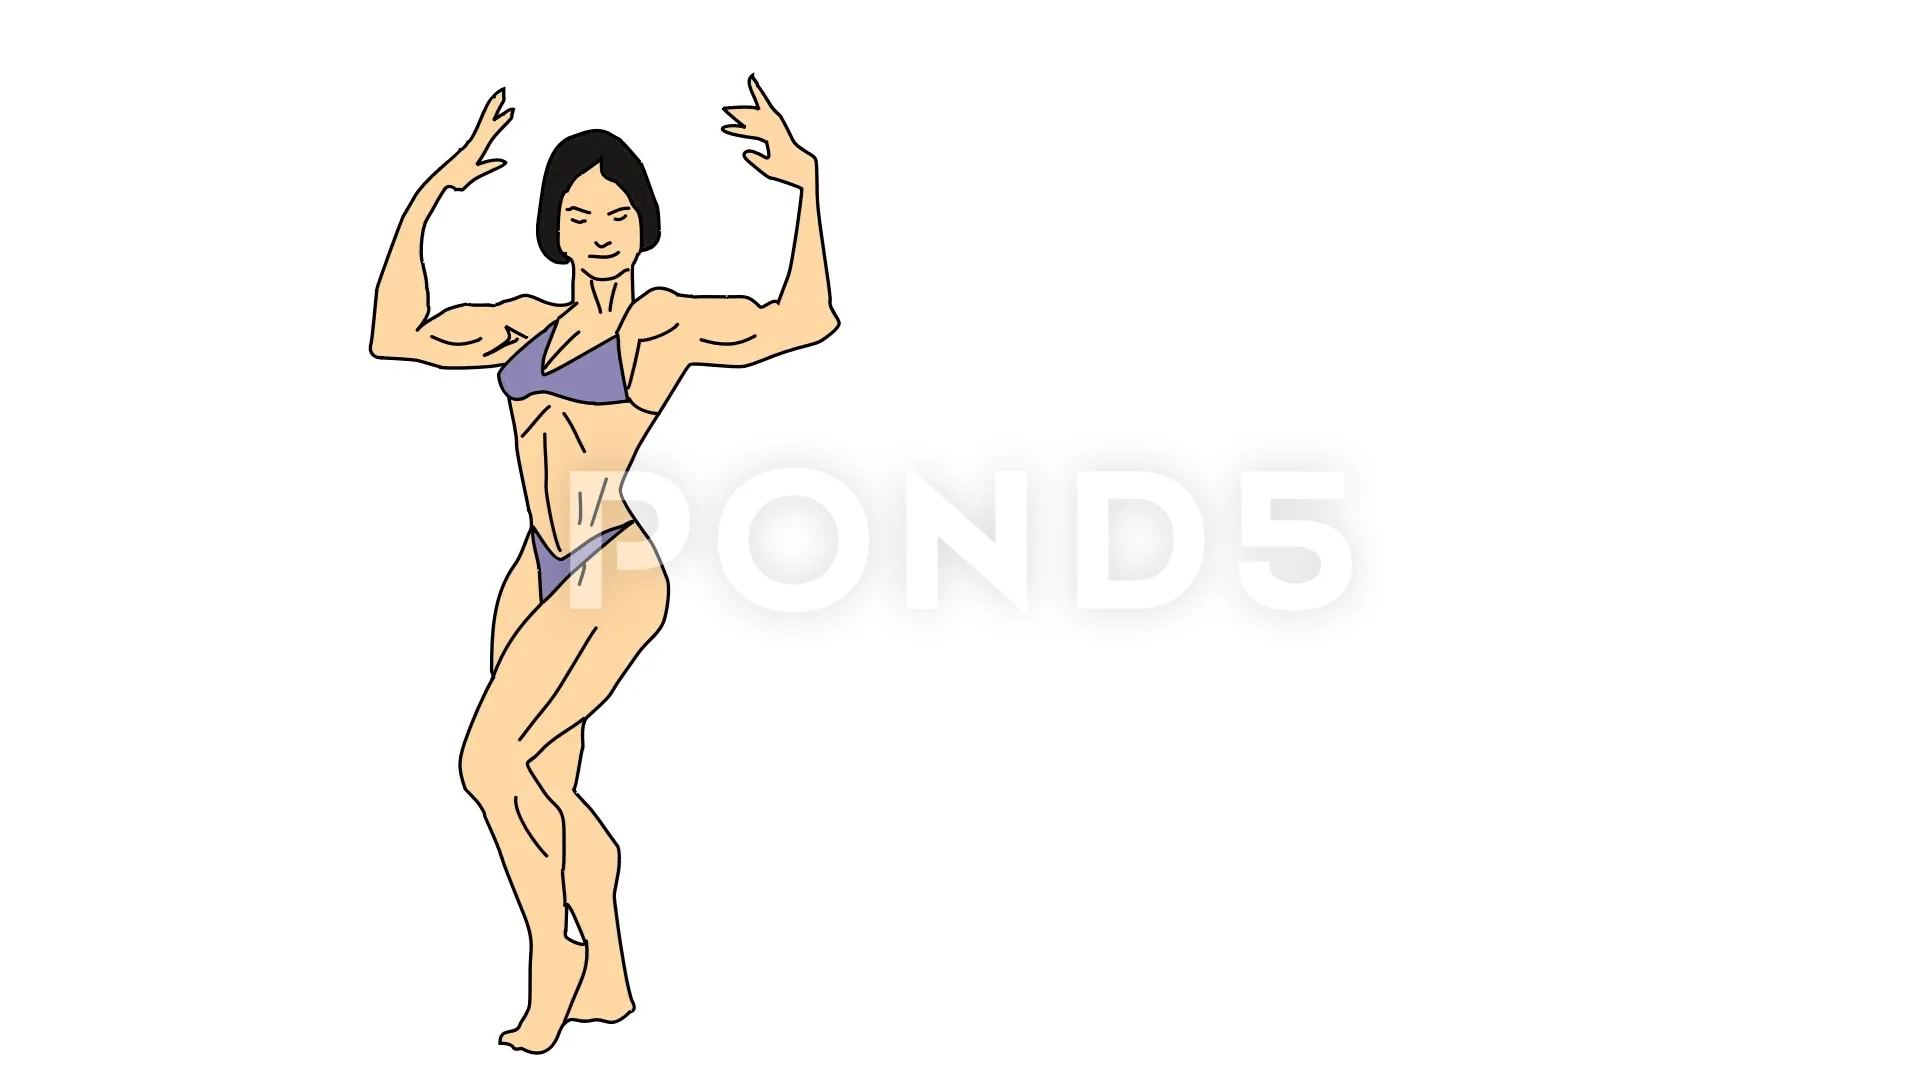 ArtStation - Blendshapes bodybuilder study, John Newell | Bodybuilding,  Anatomy sketches, Art poses